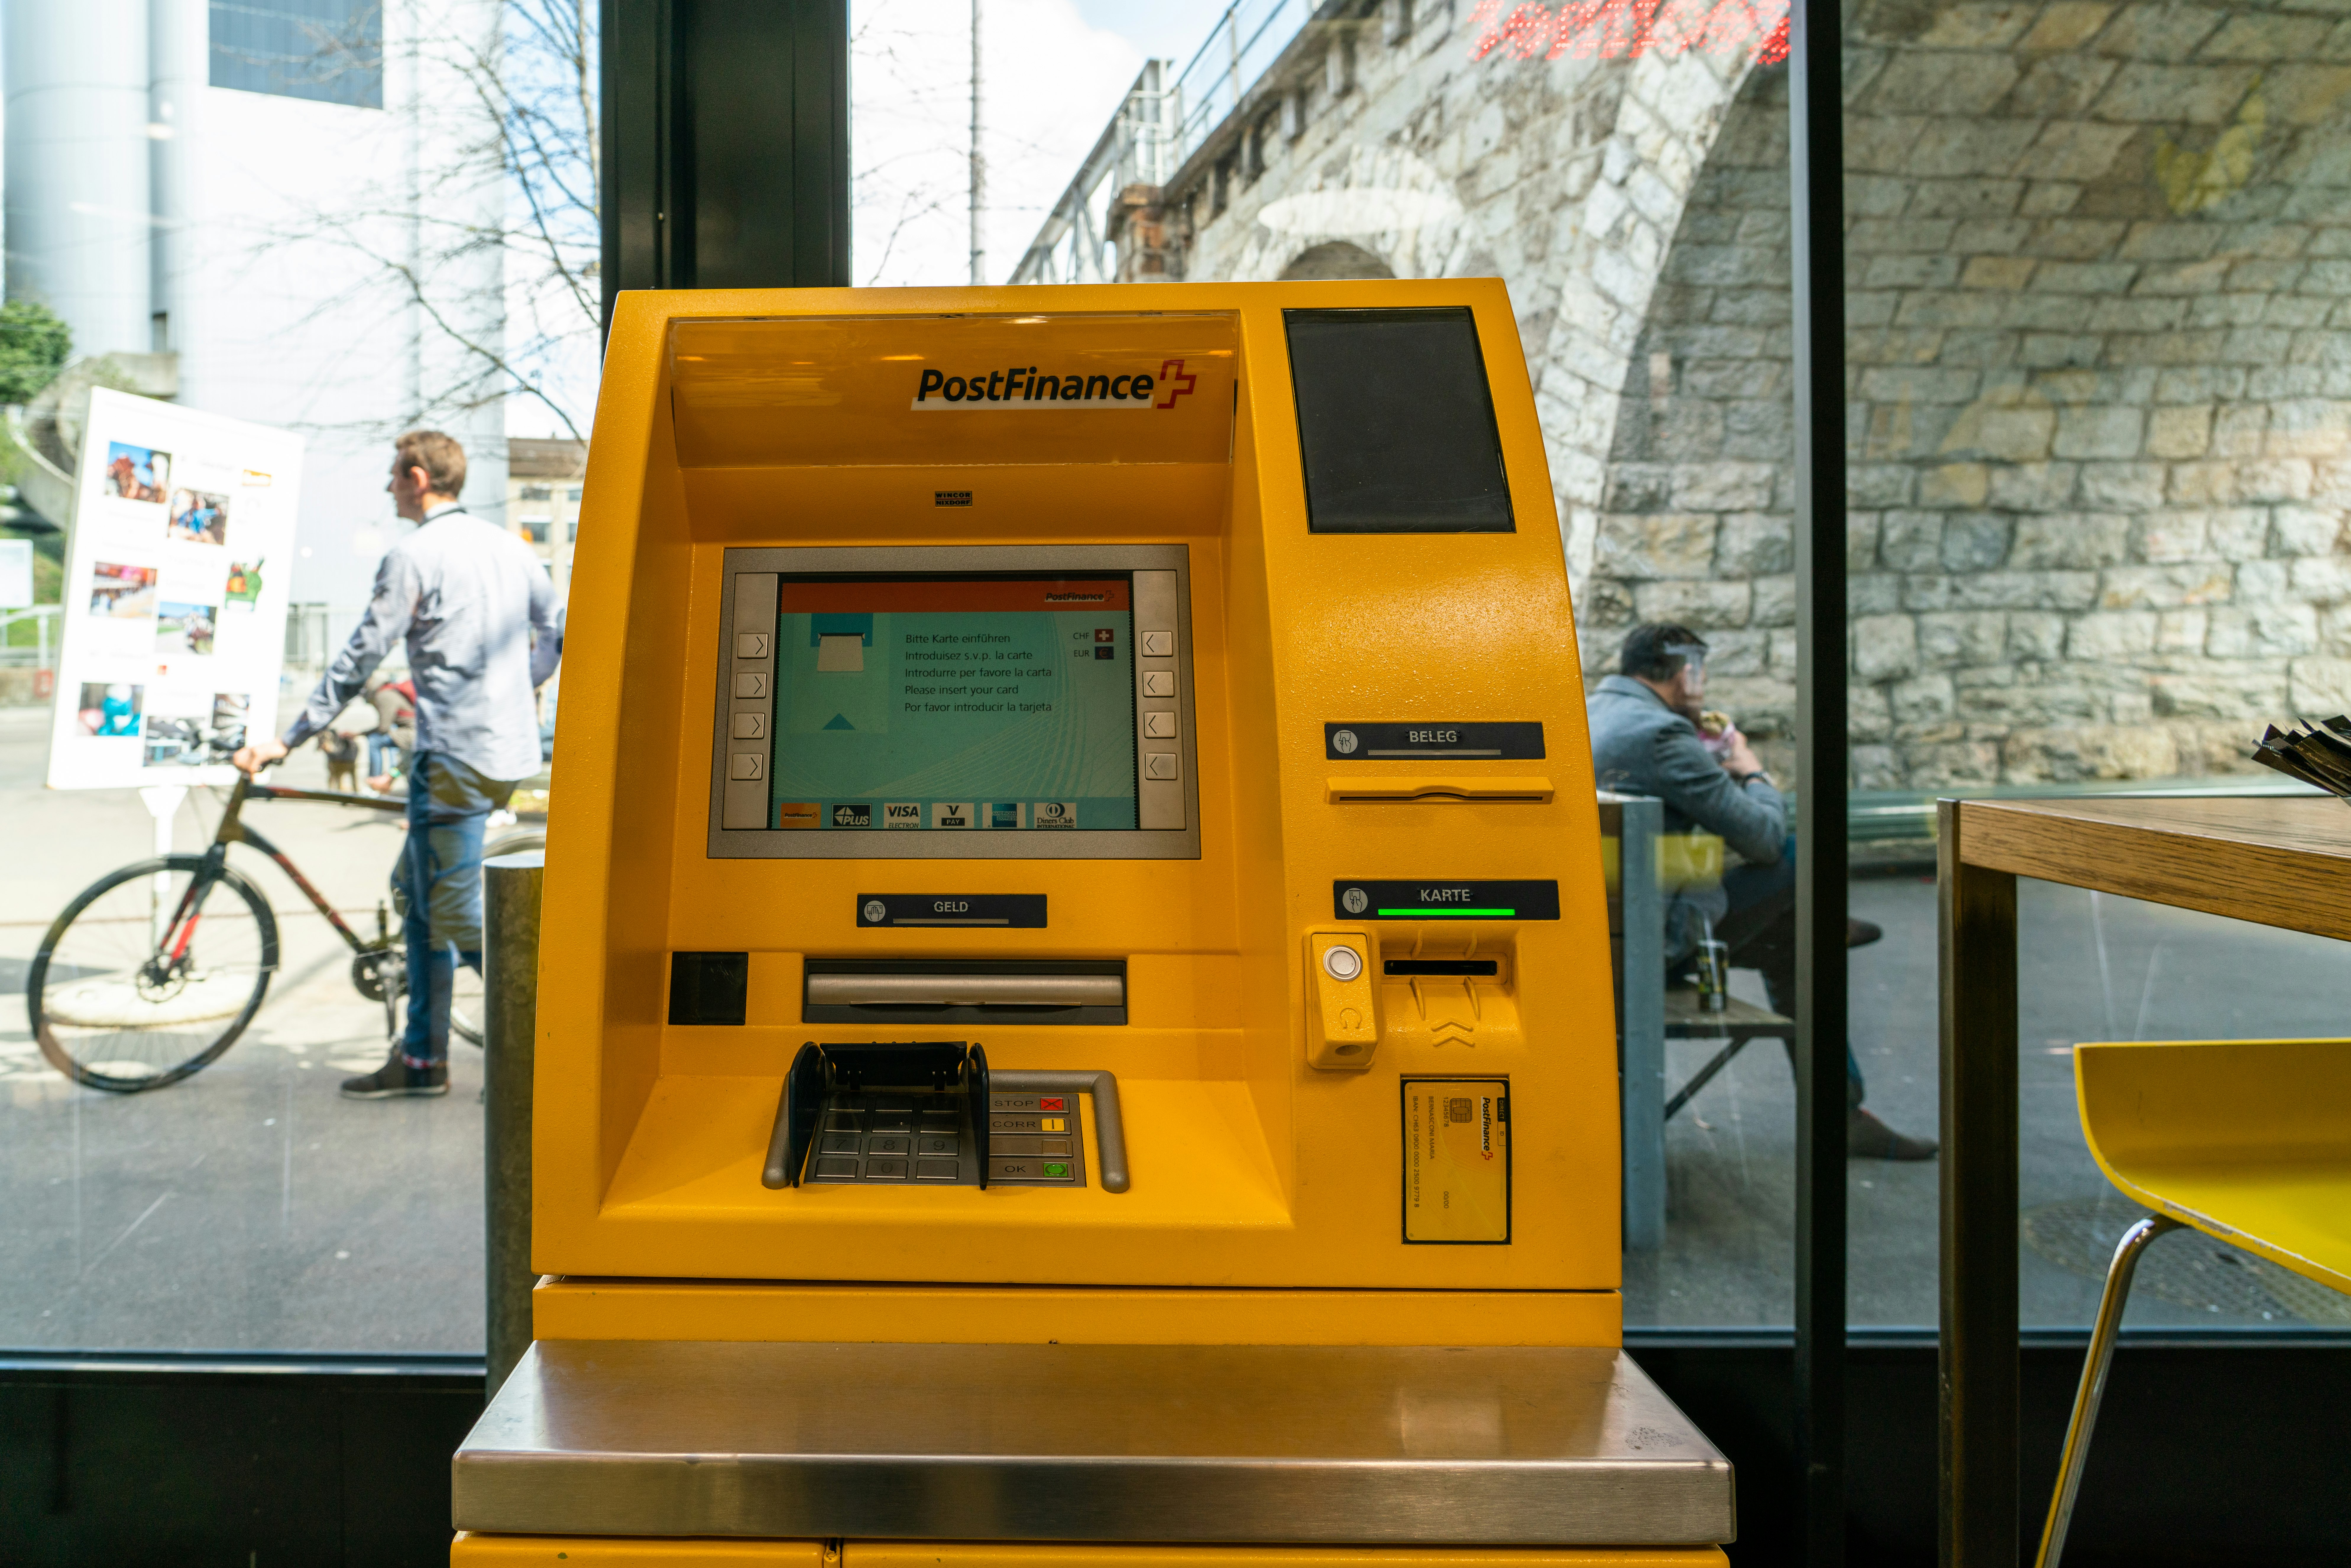 Post Finance ATM machine near glass wall